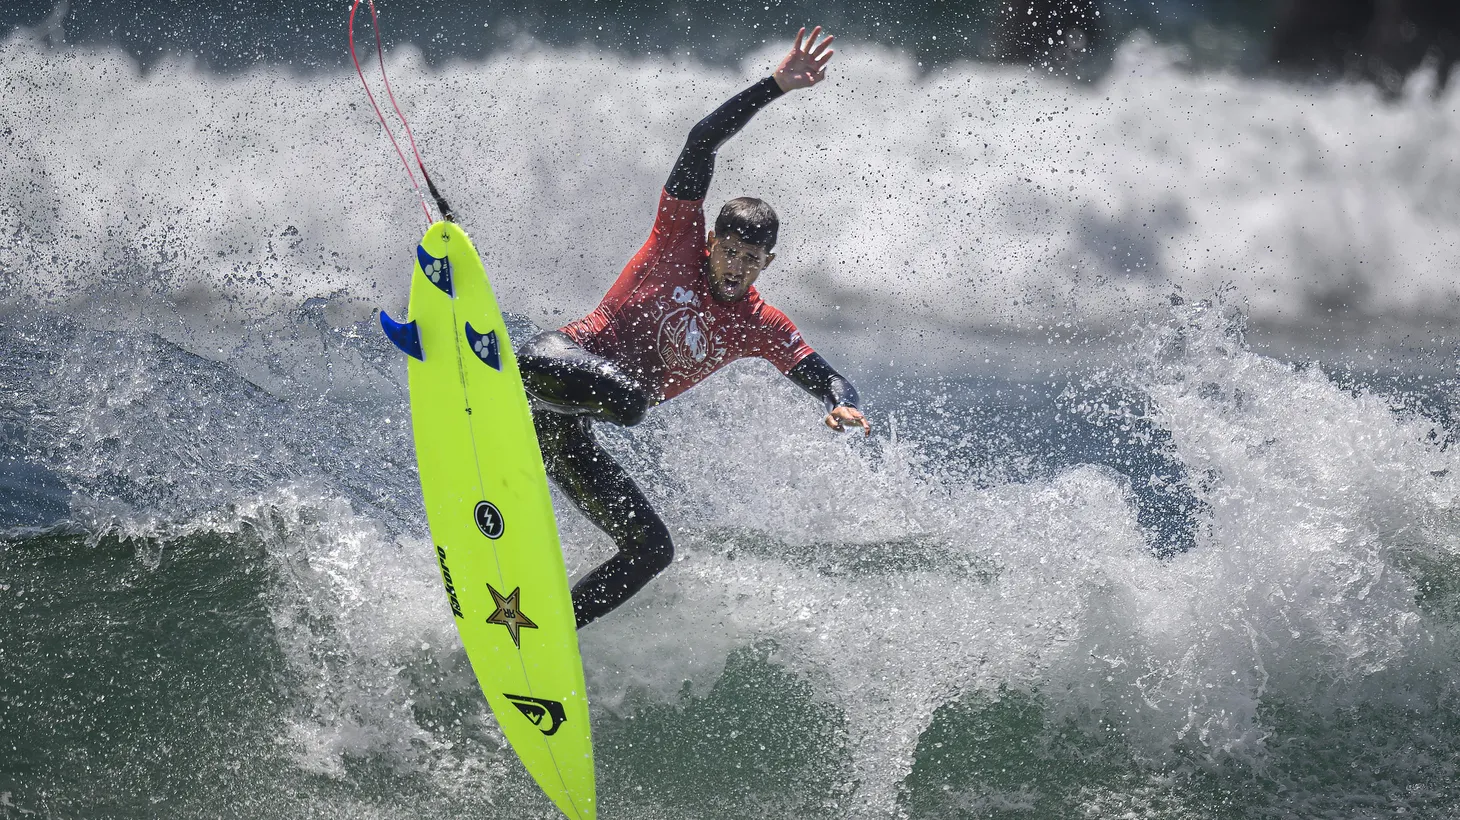 Ezekiel Lau wins the Men’s U.S. Open of Surfing in Huntington Beach on Sunday, August 7, 2022.